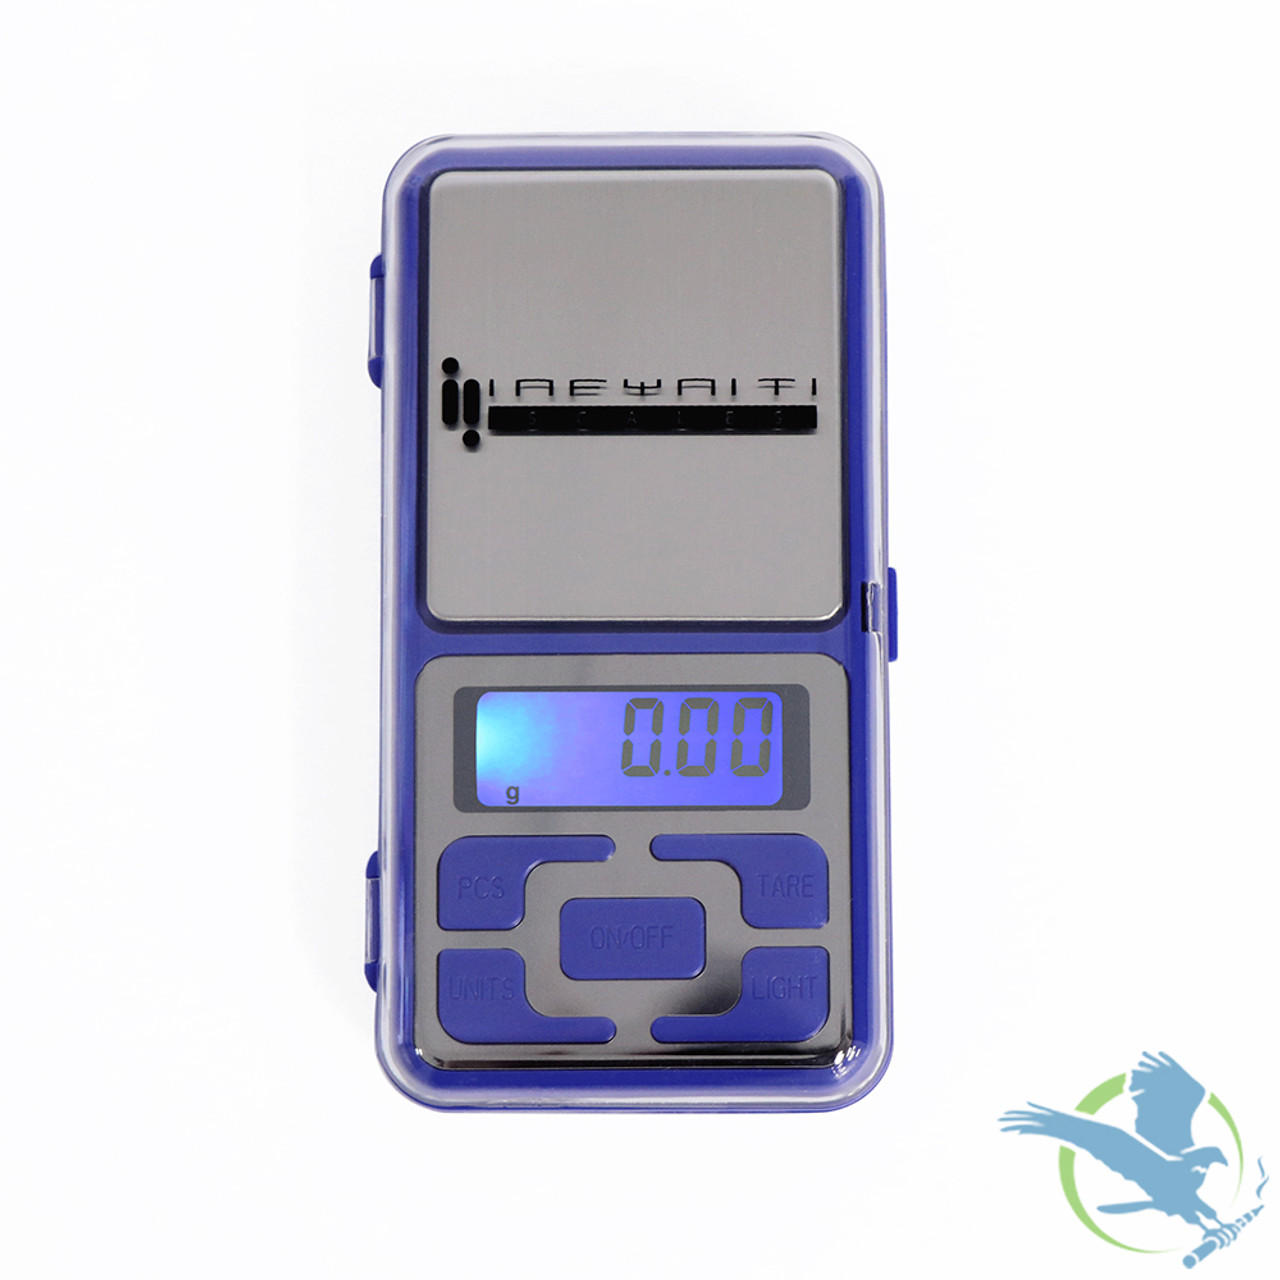 Panther Digital Pocket Scale, 100g x 0.01g